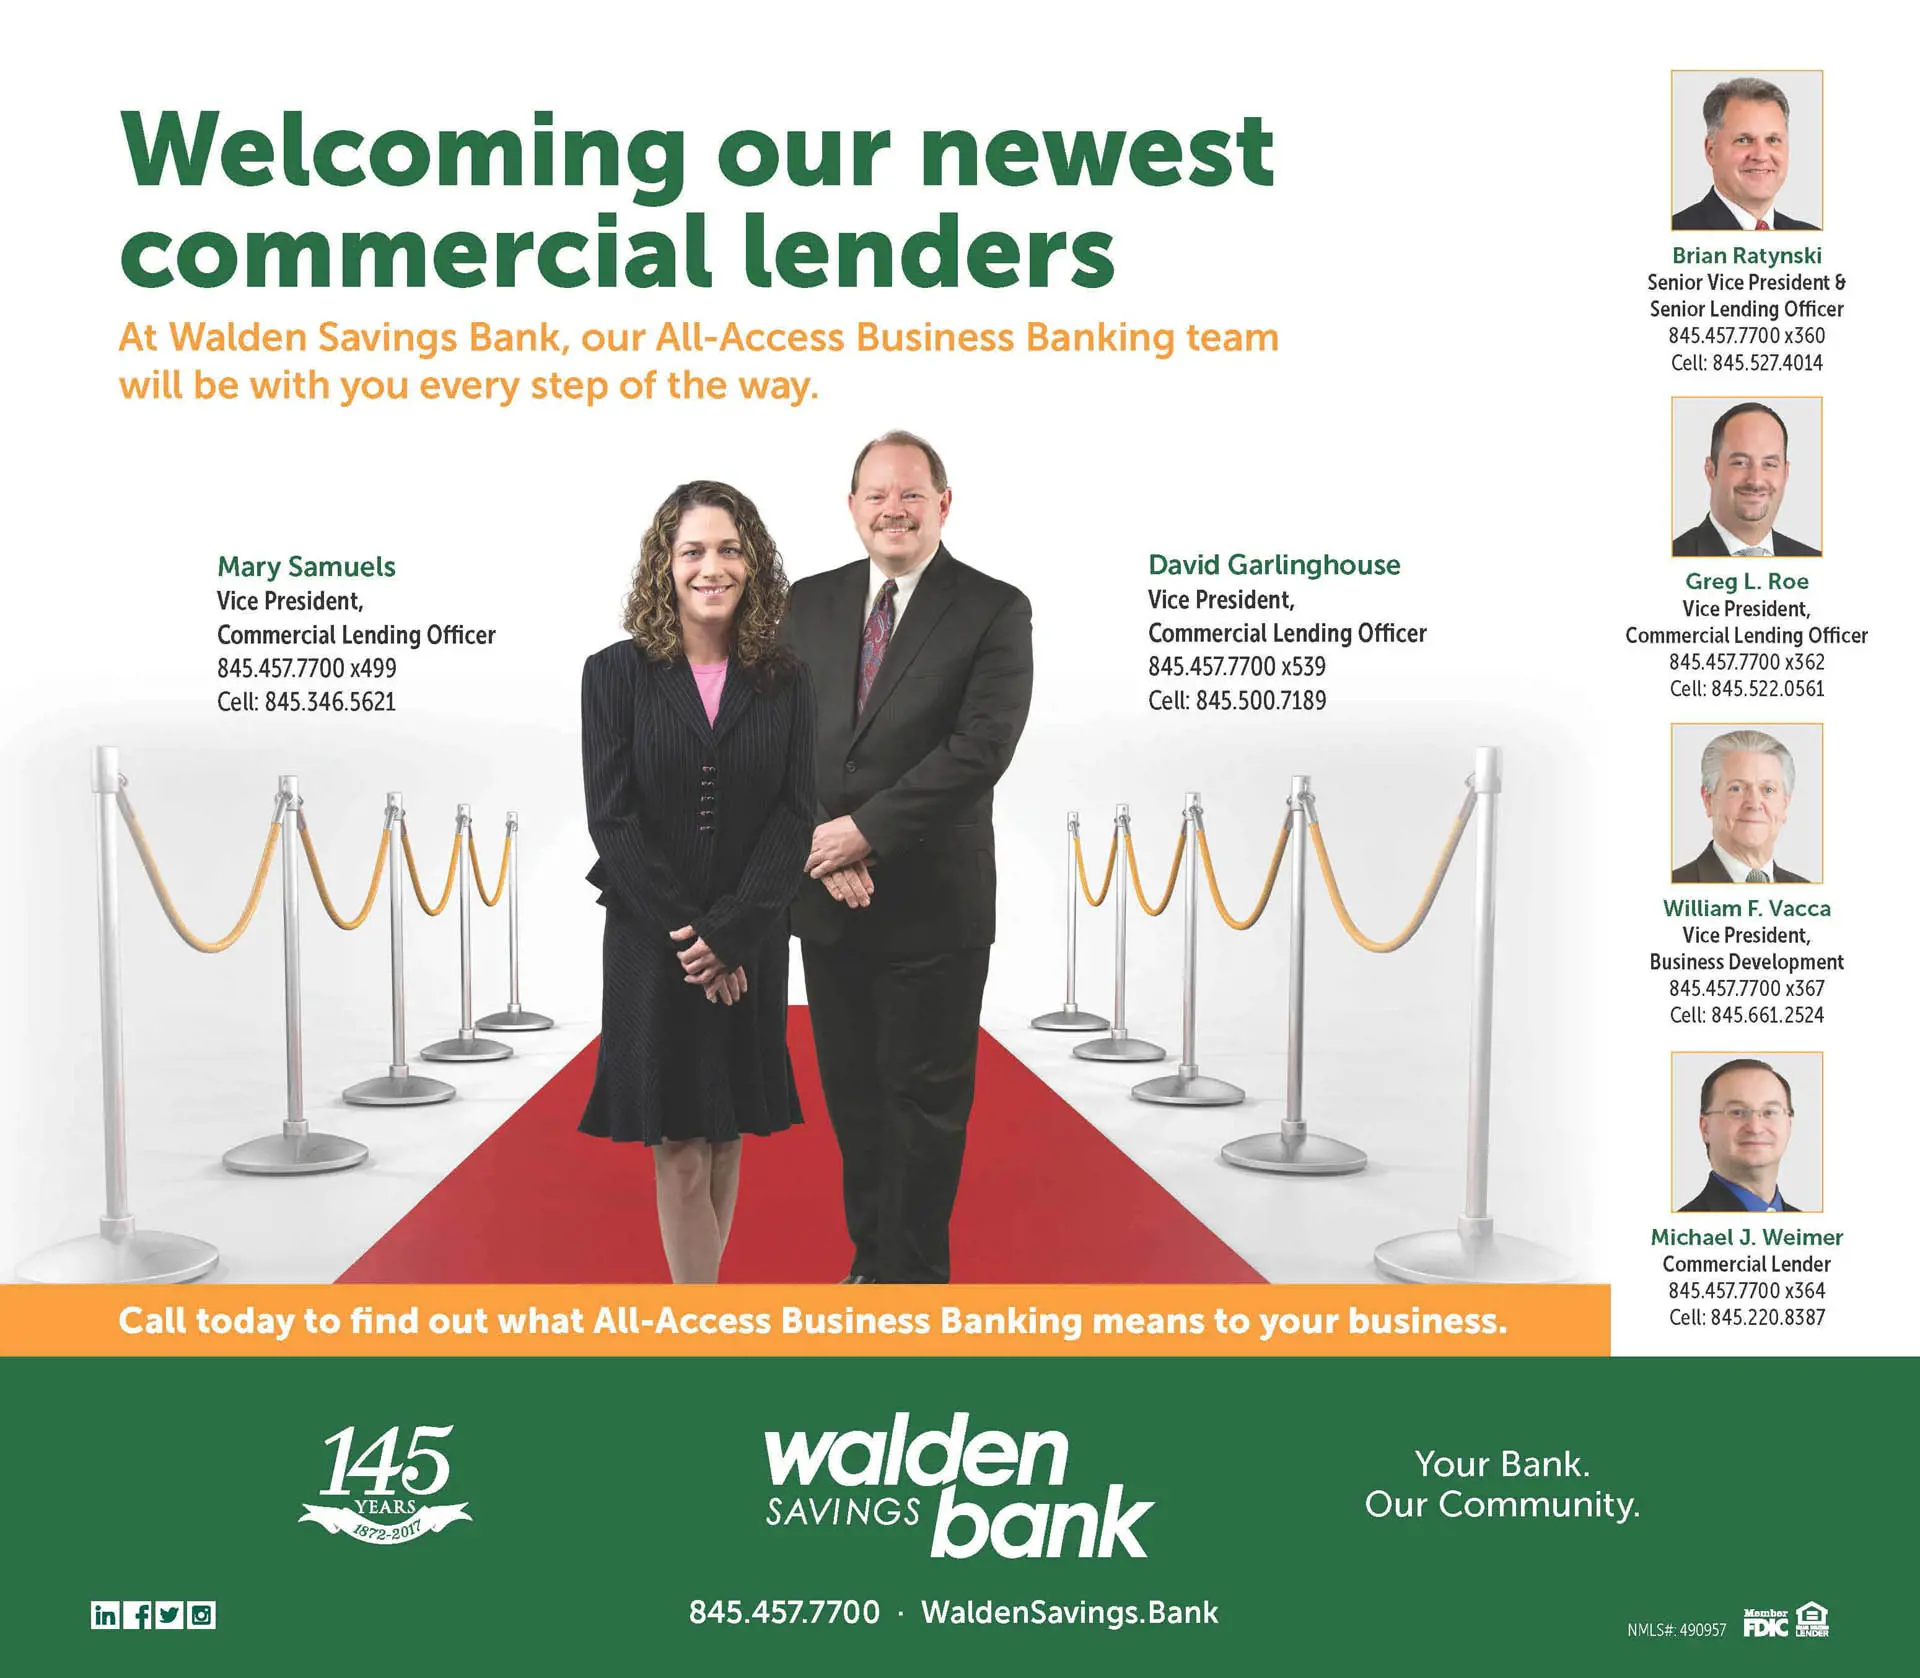 WALDEN SAVINGS BANK EXPANDS COMMERCIAL LENDING DEPARTMENT